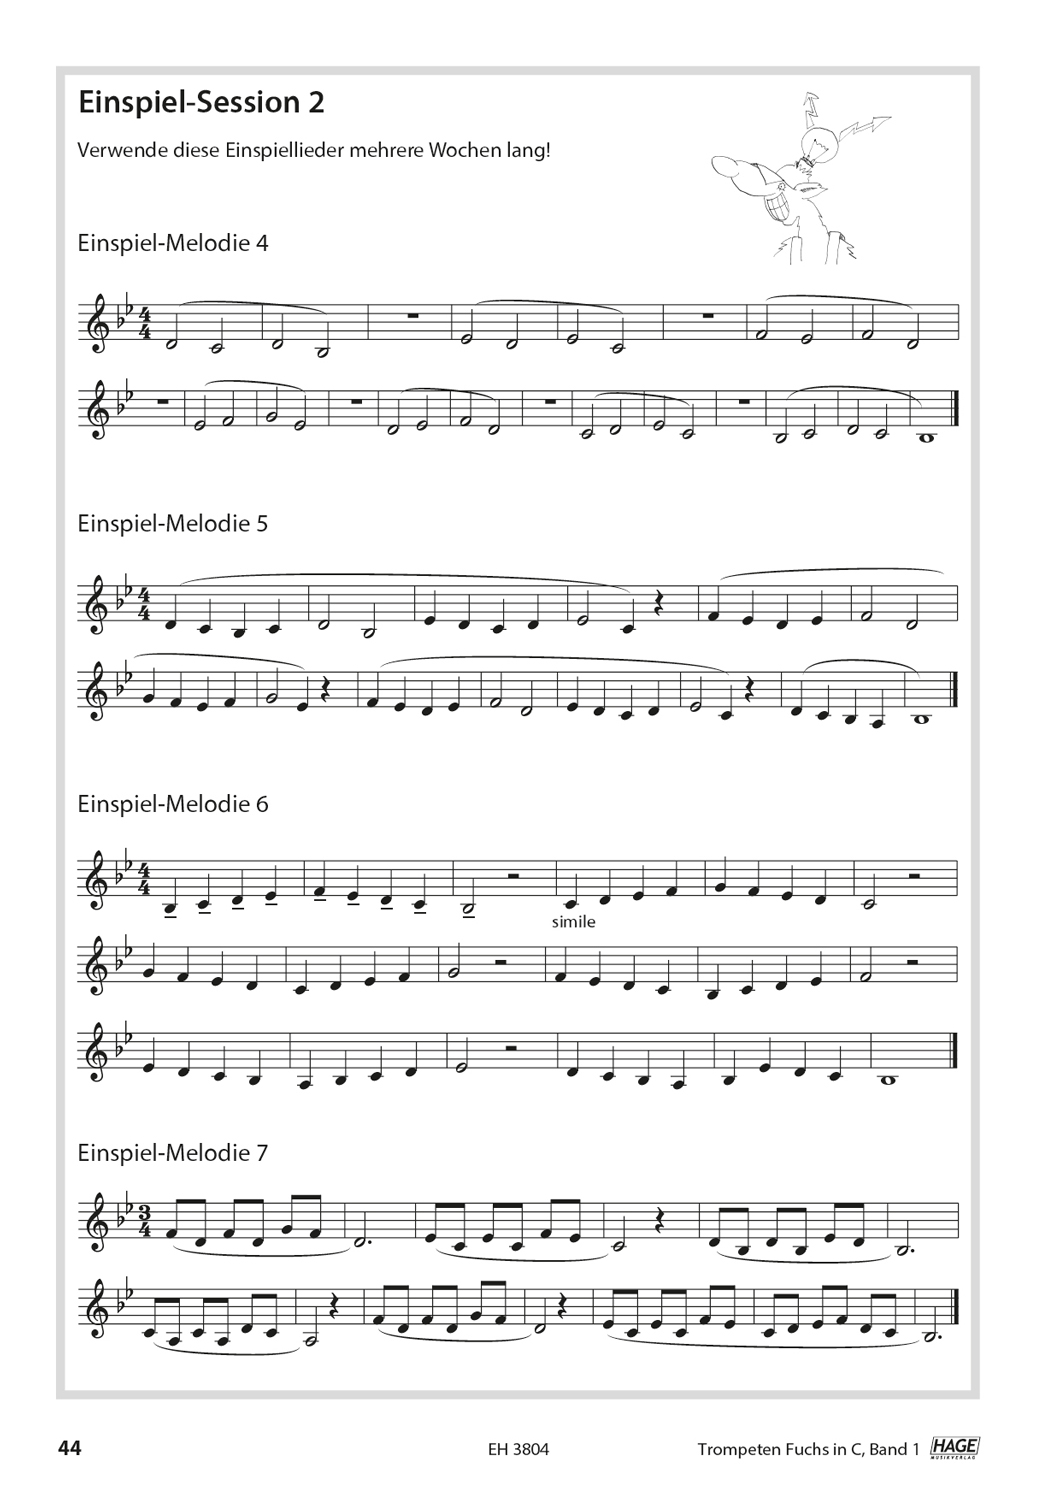 Trompeten Fuchs Volume 1 in C for trombone choir Pages 7